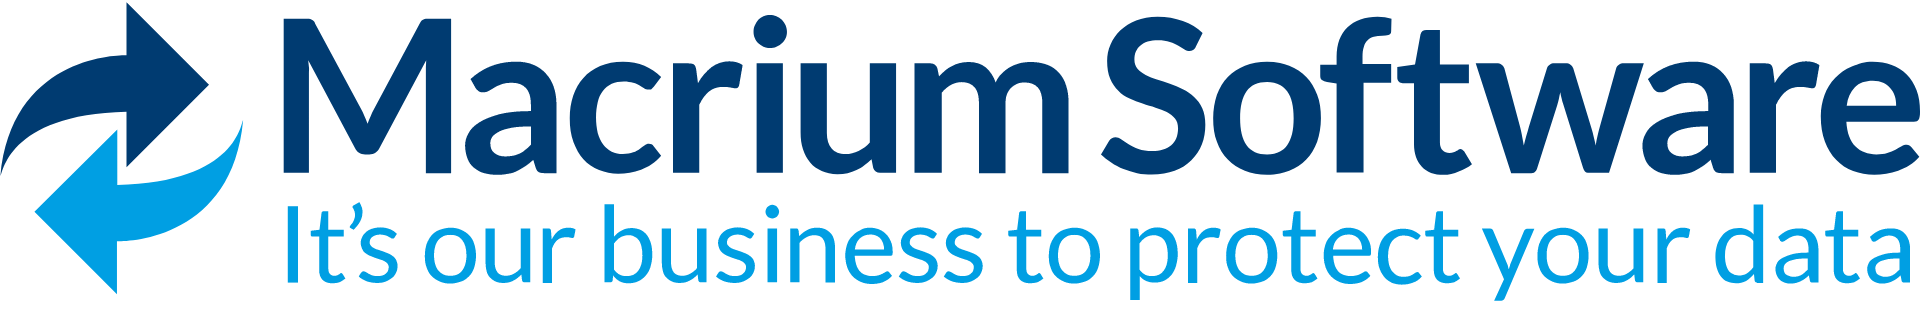 Macrium company logo